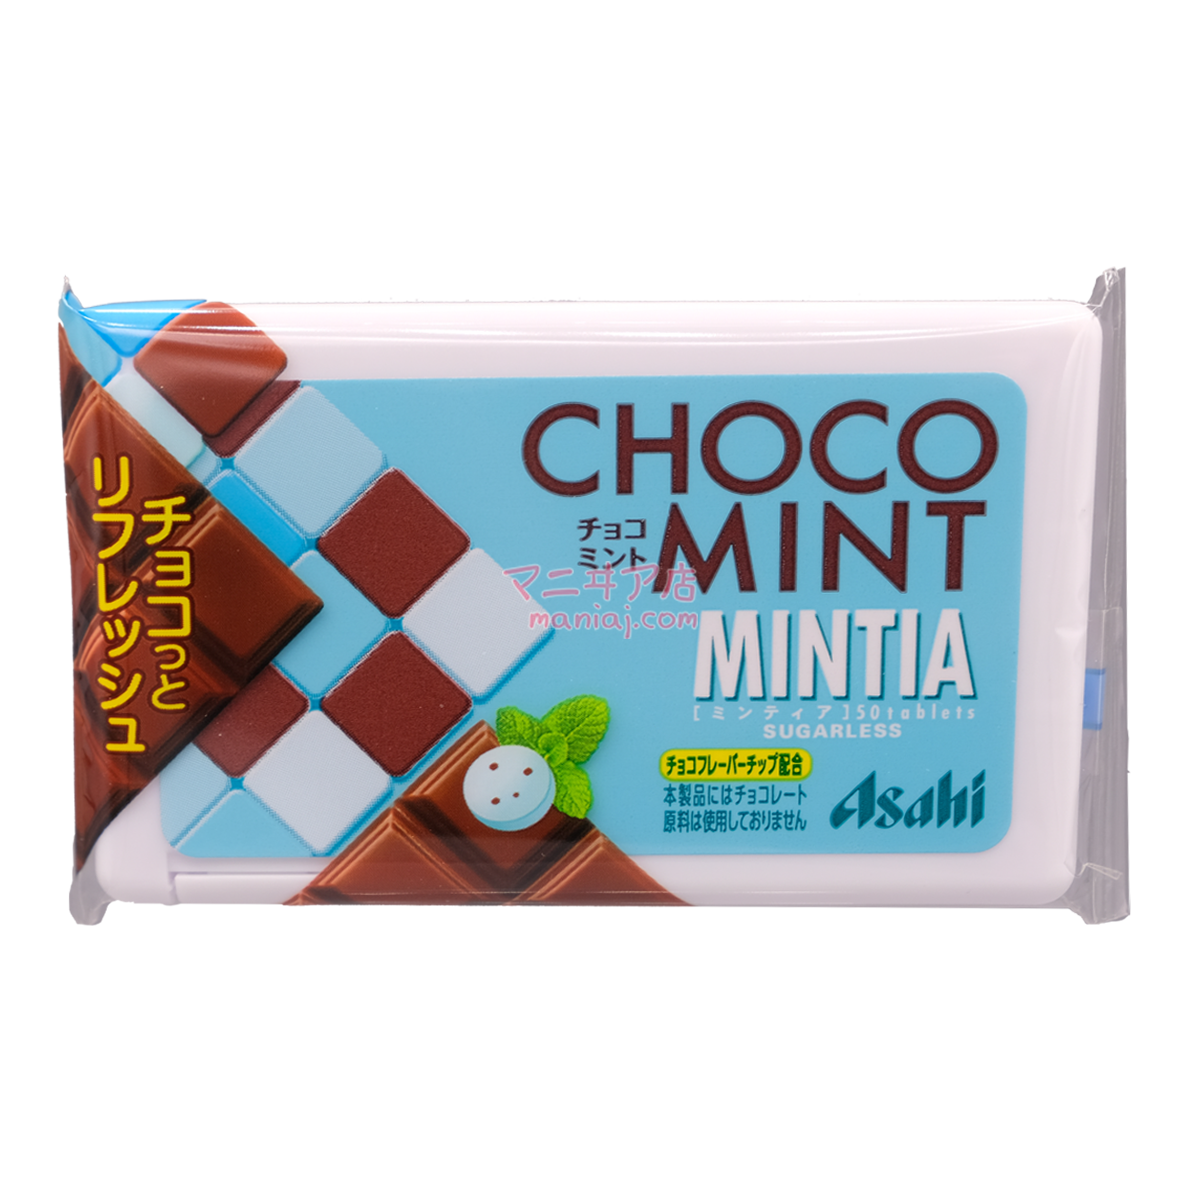 MINTIA Chocolate Mints